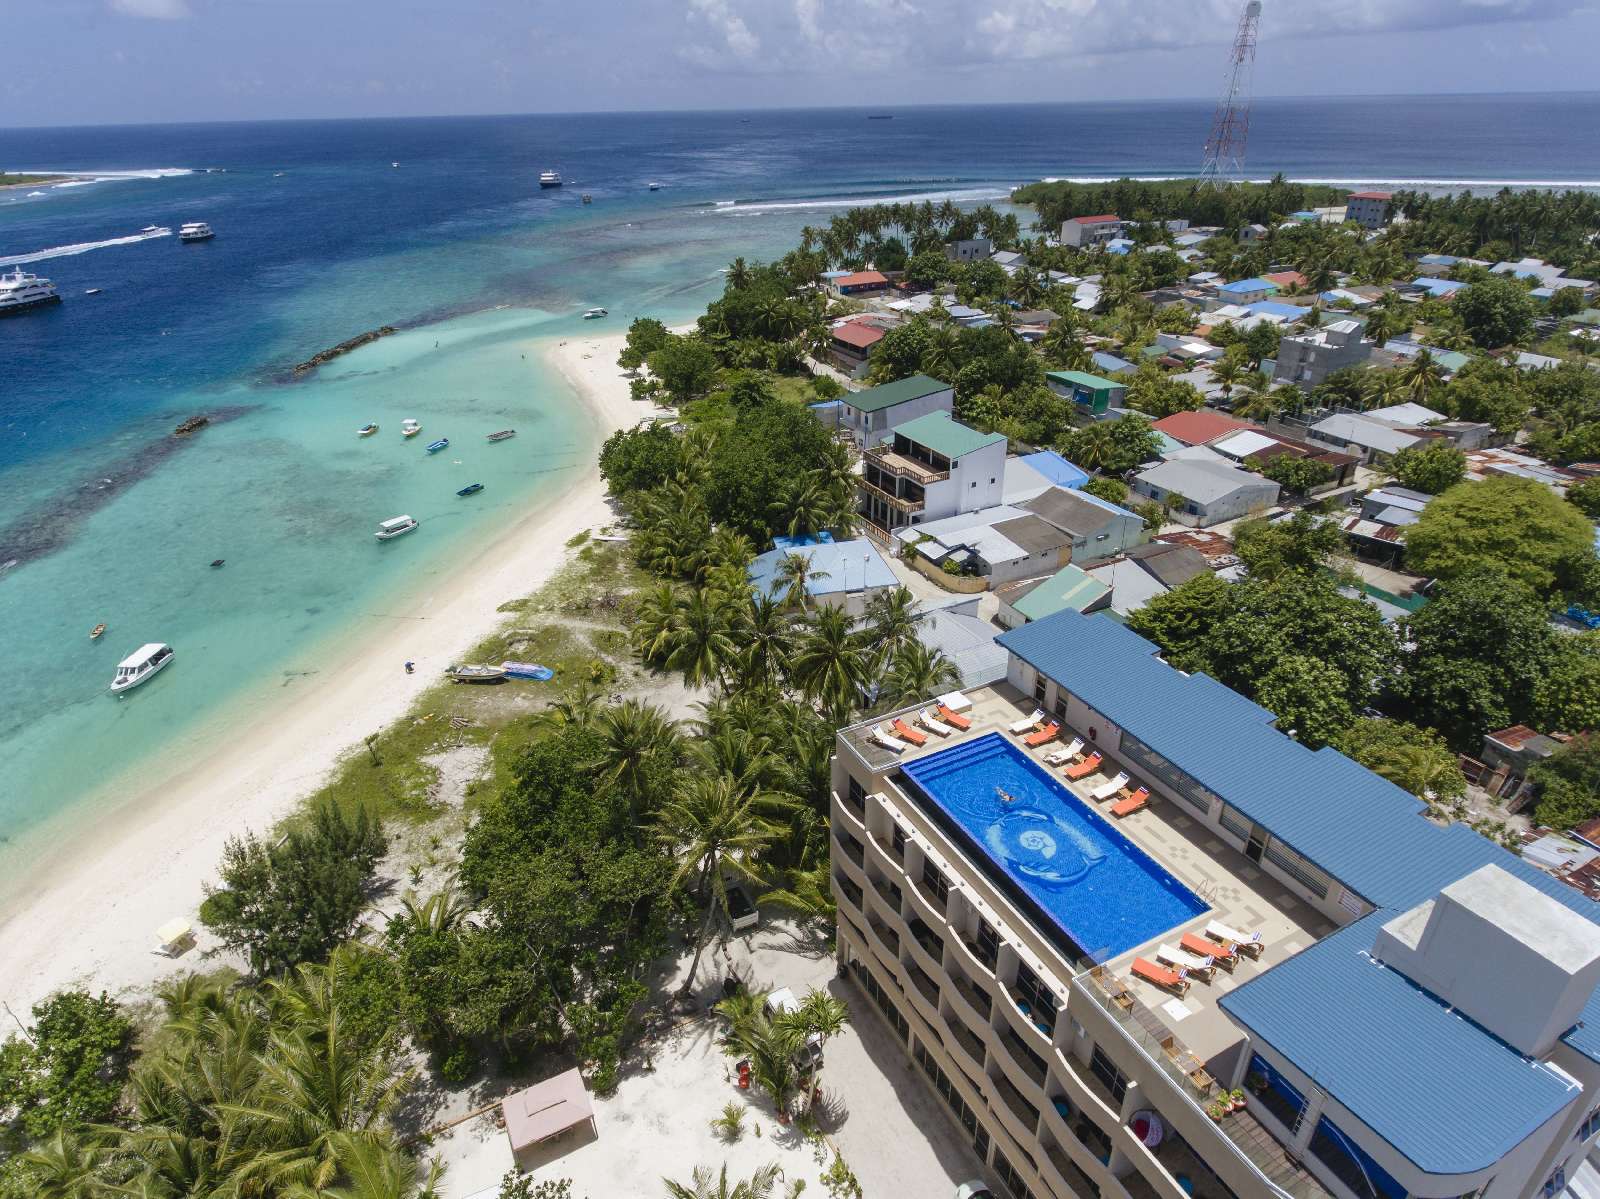 Hotel Season Paradise atb-season-paradise-maldives-9.jpg